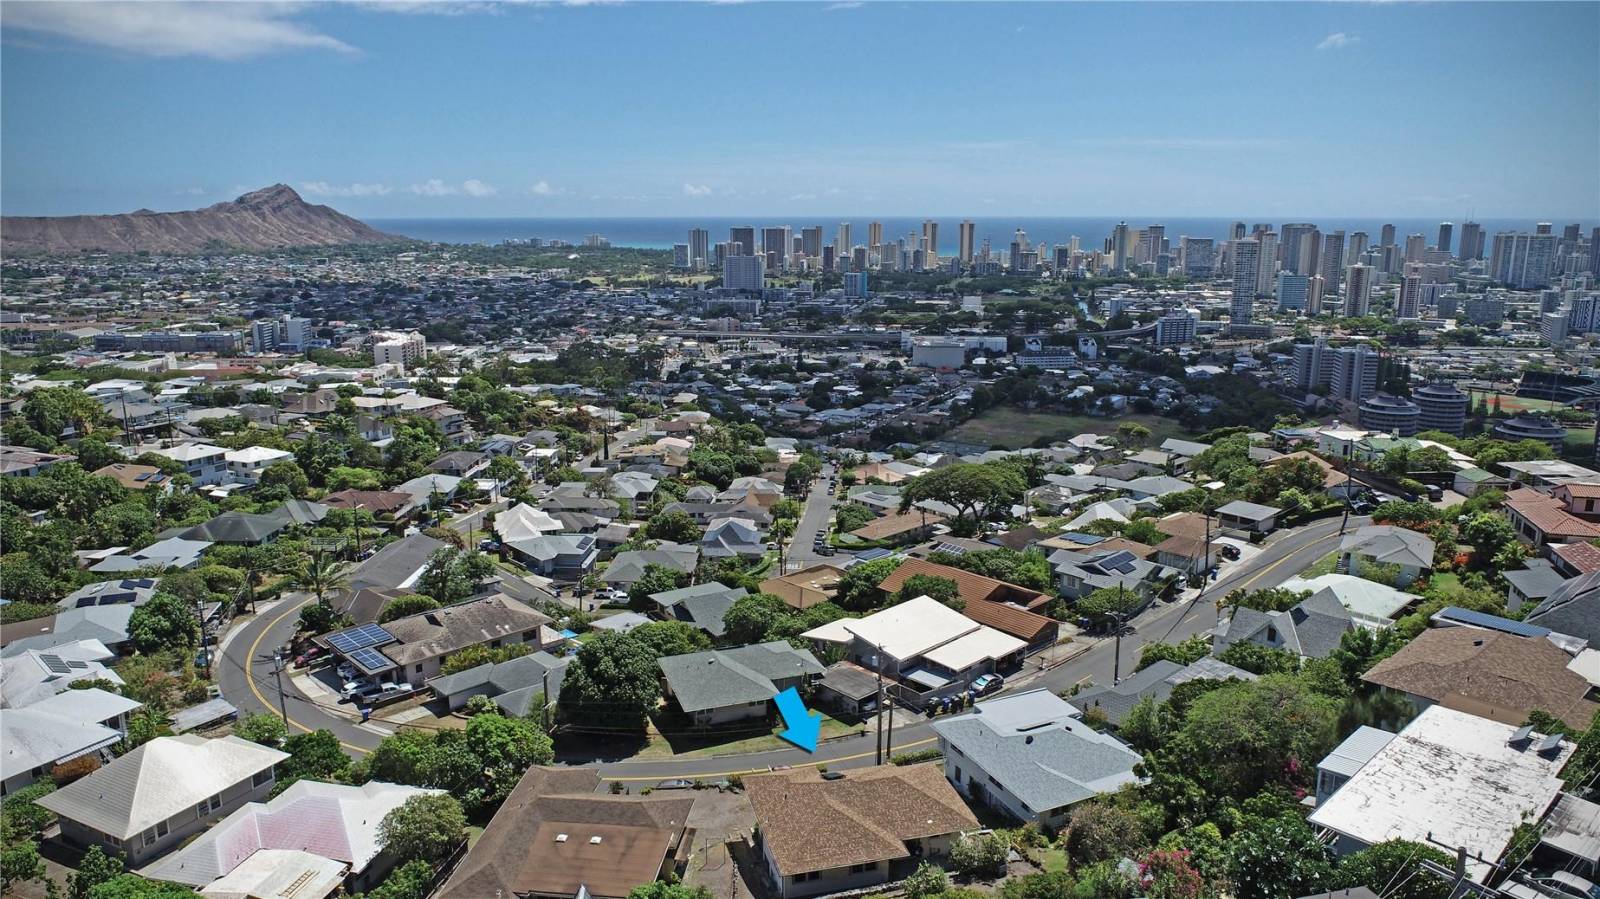 St Louis Heights Neighborhood - Oahu - Hawaii Real Estate Market